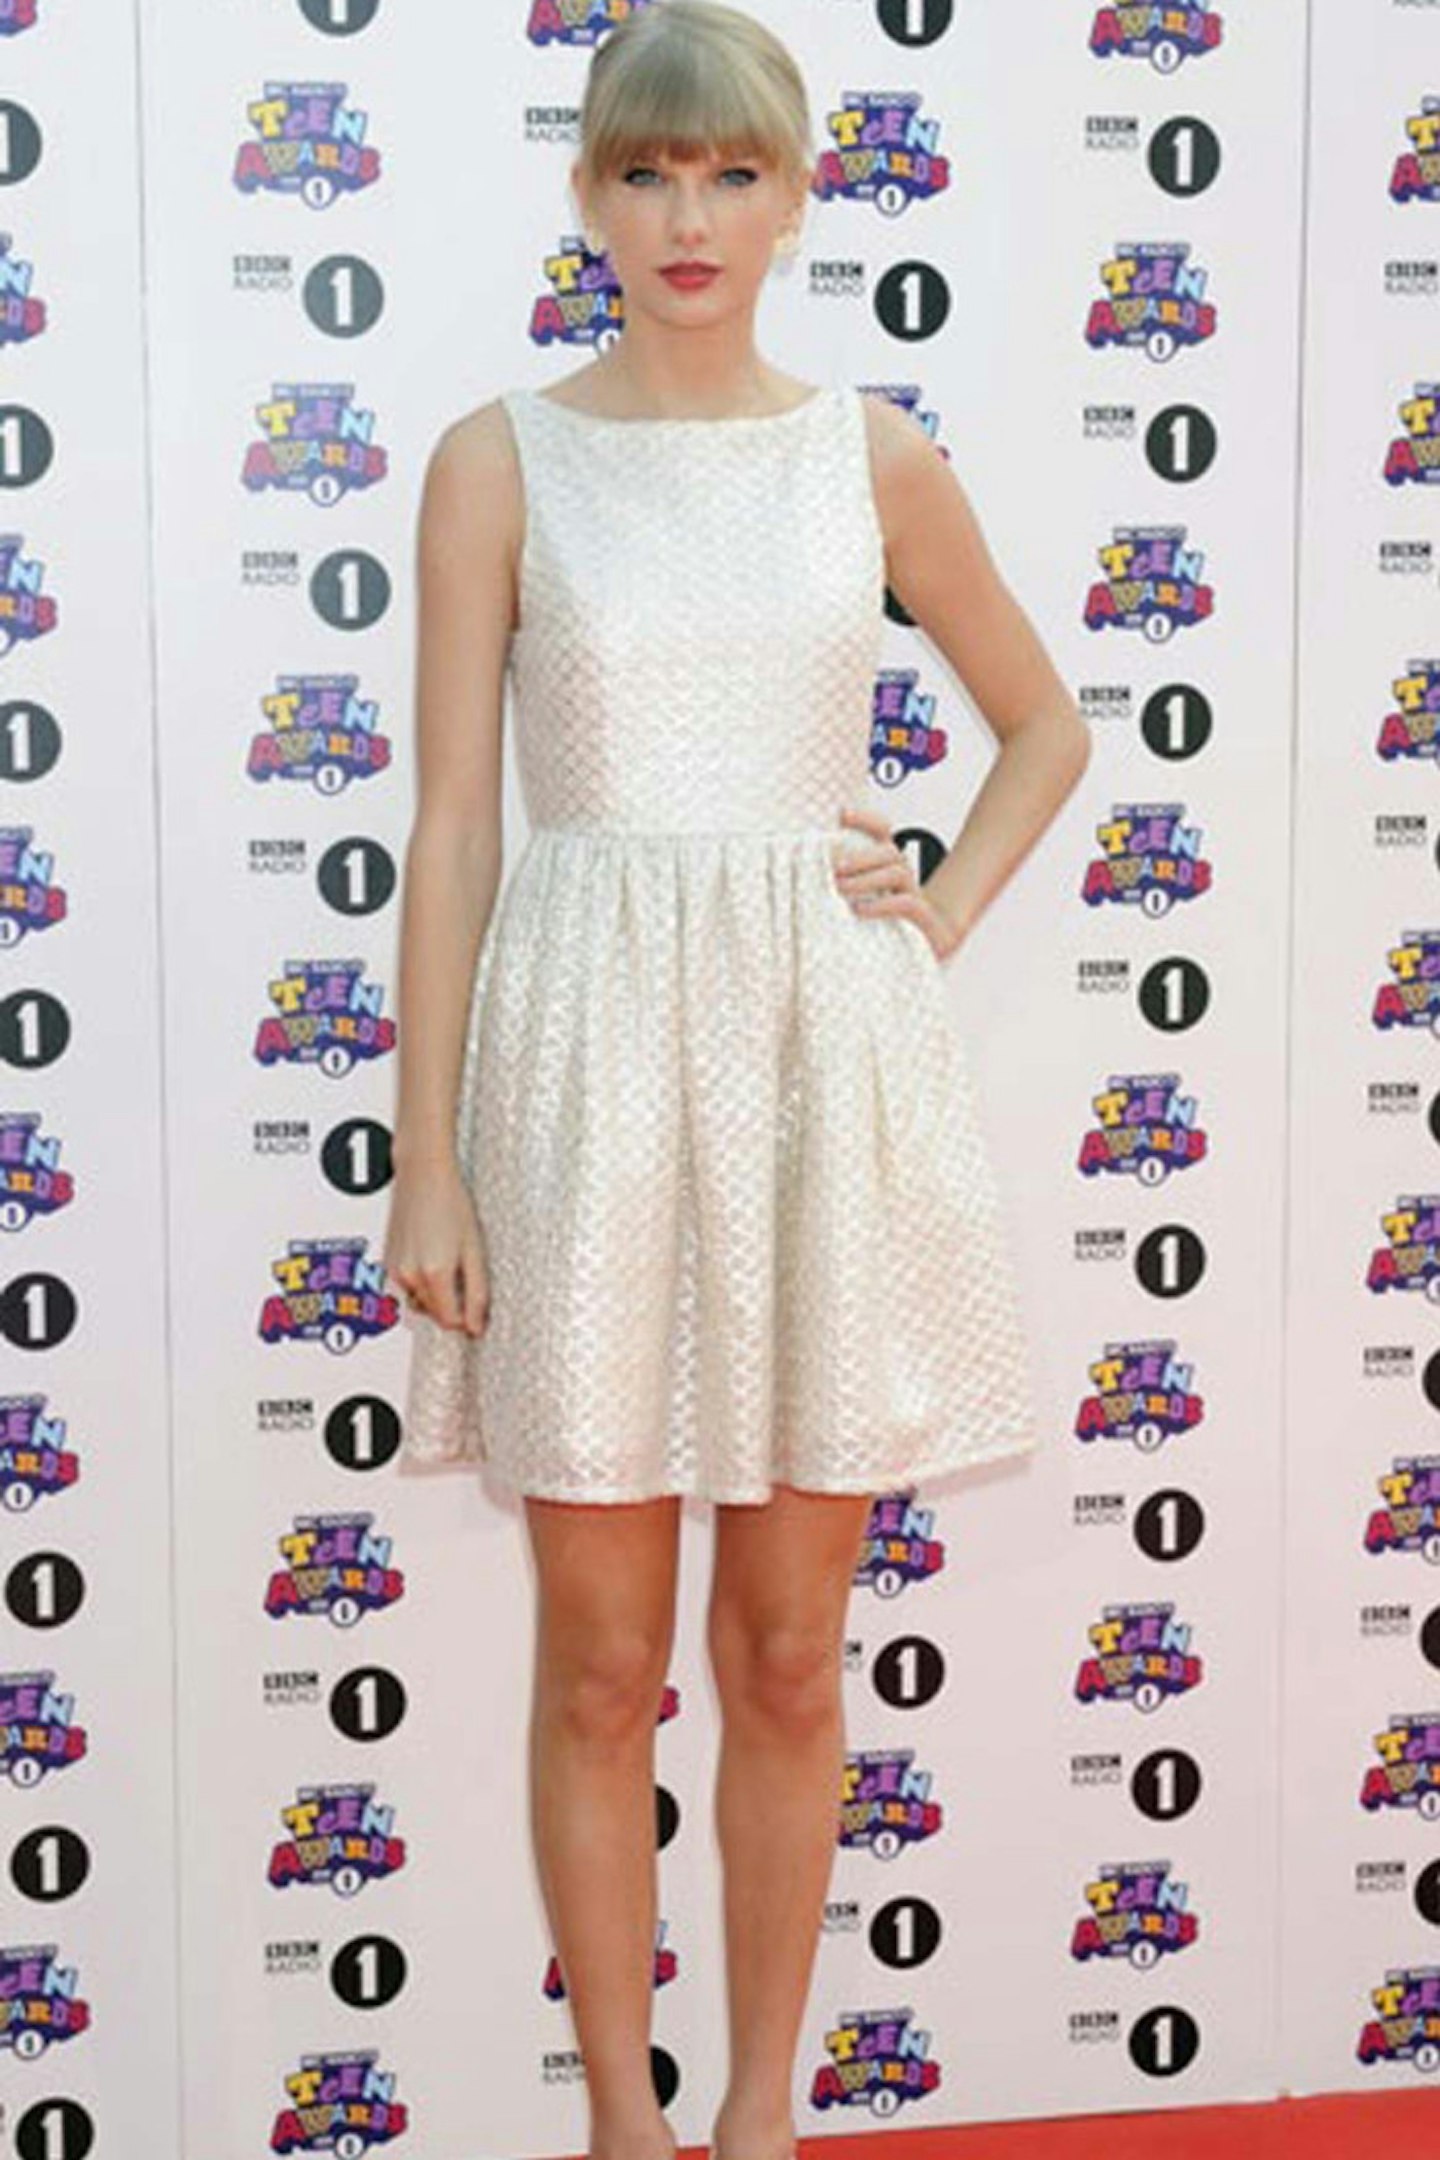 3 2- Taylor Swift at the Radio 1 Teen Awards - October 2012